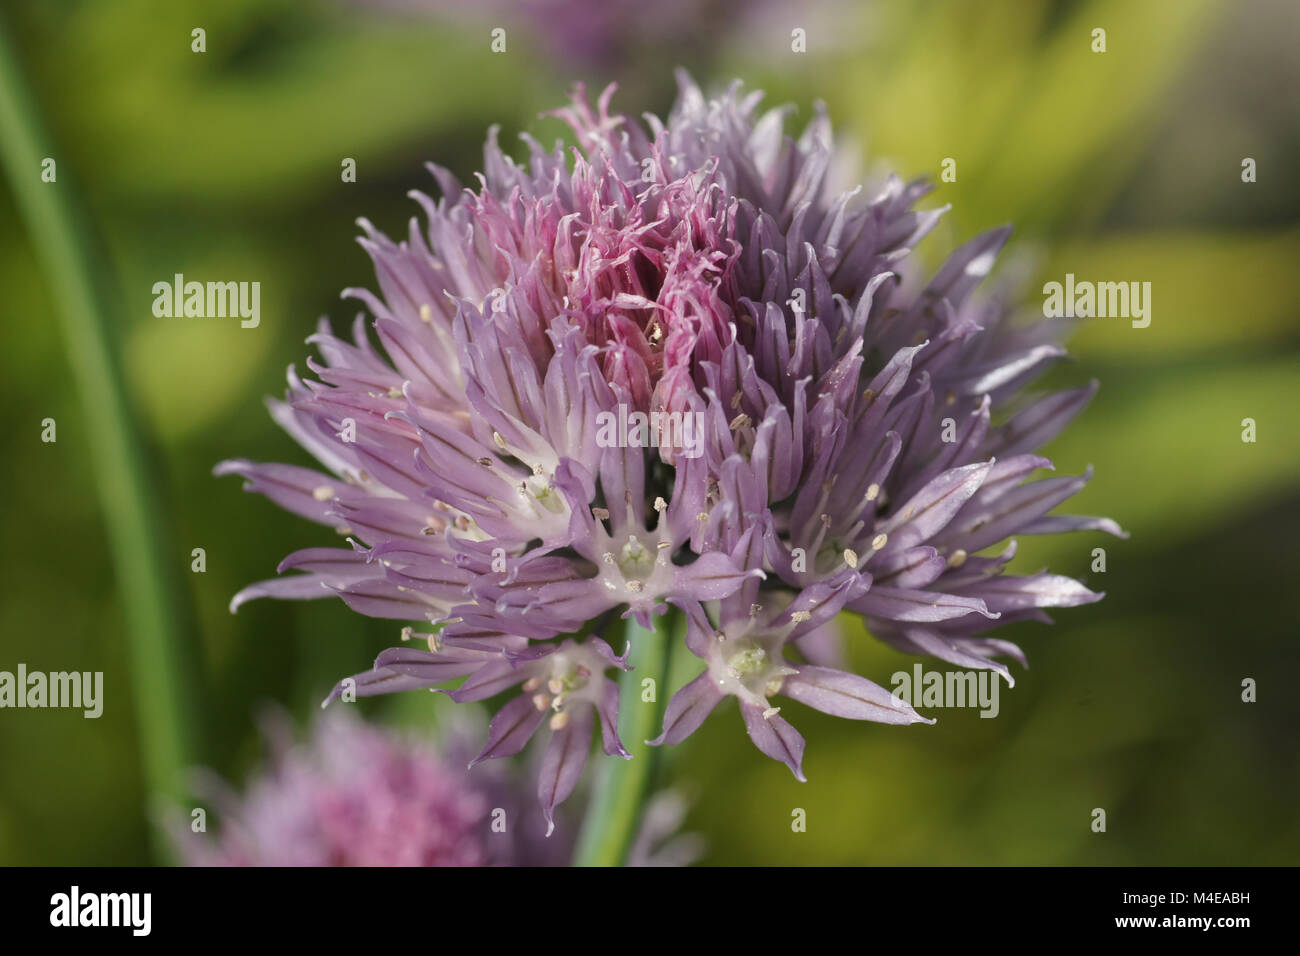 Allium schoenoprasum, Chive Stock Photo